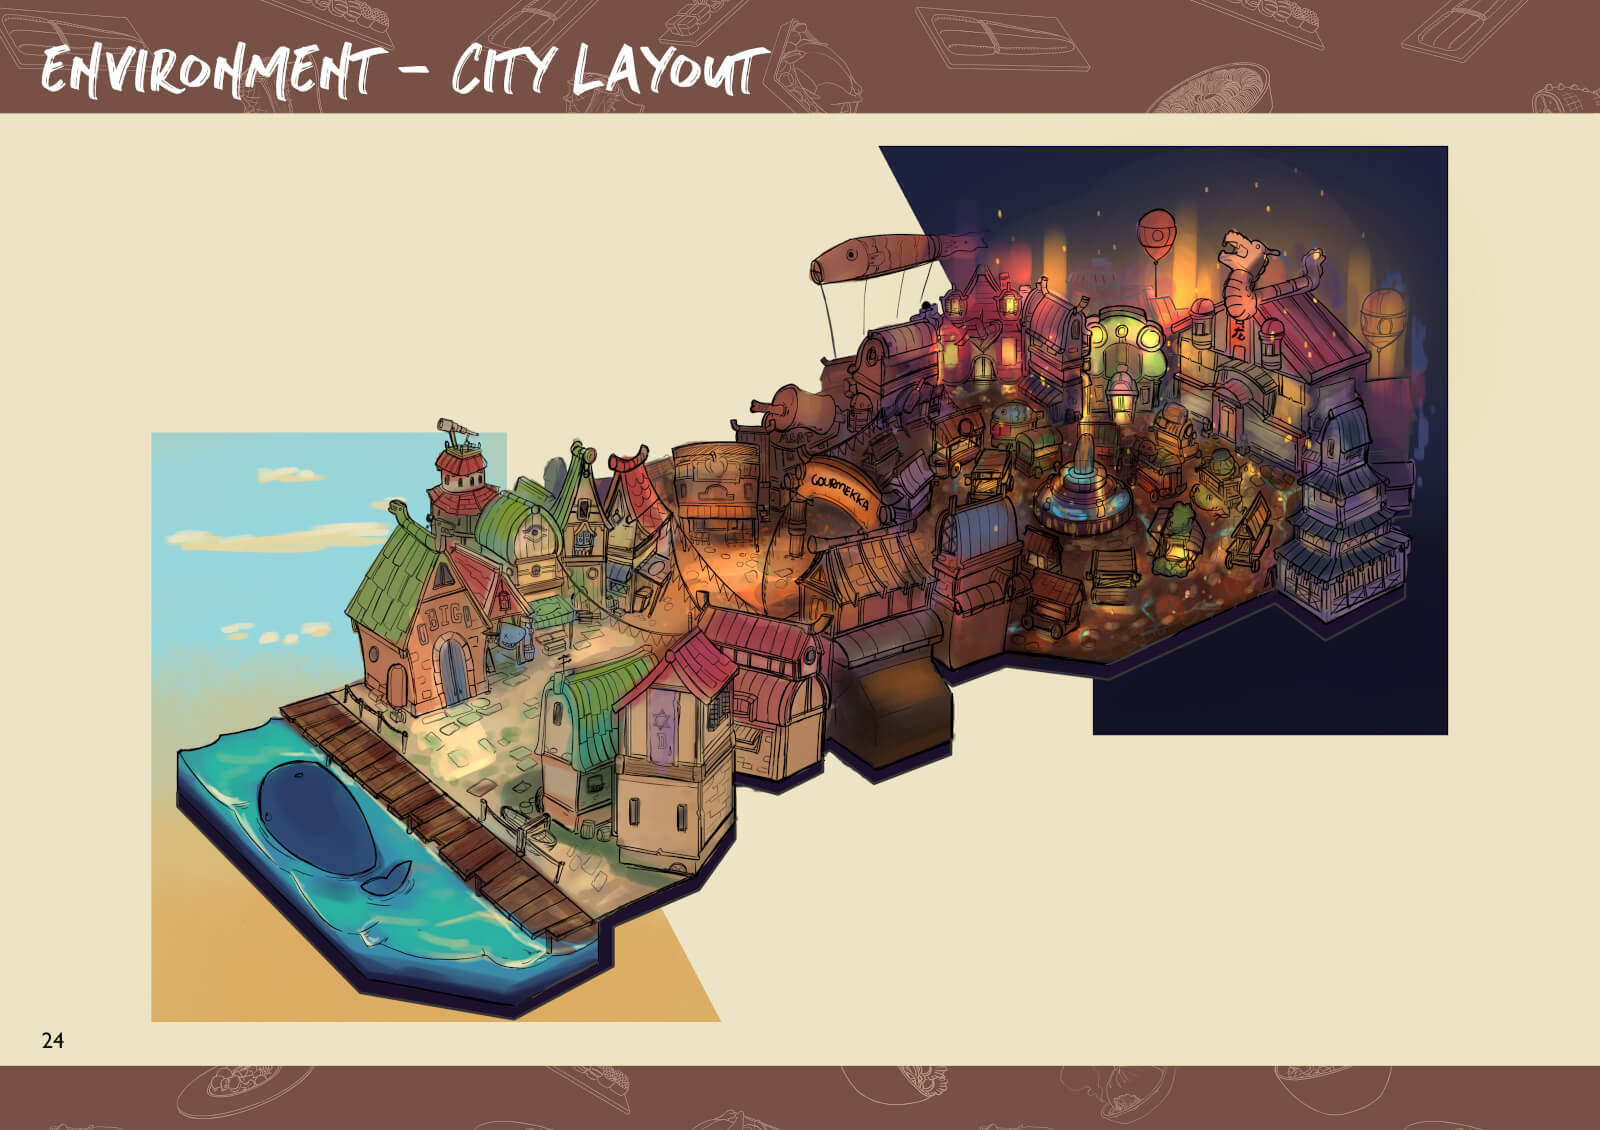 City layout drawing